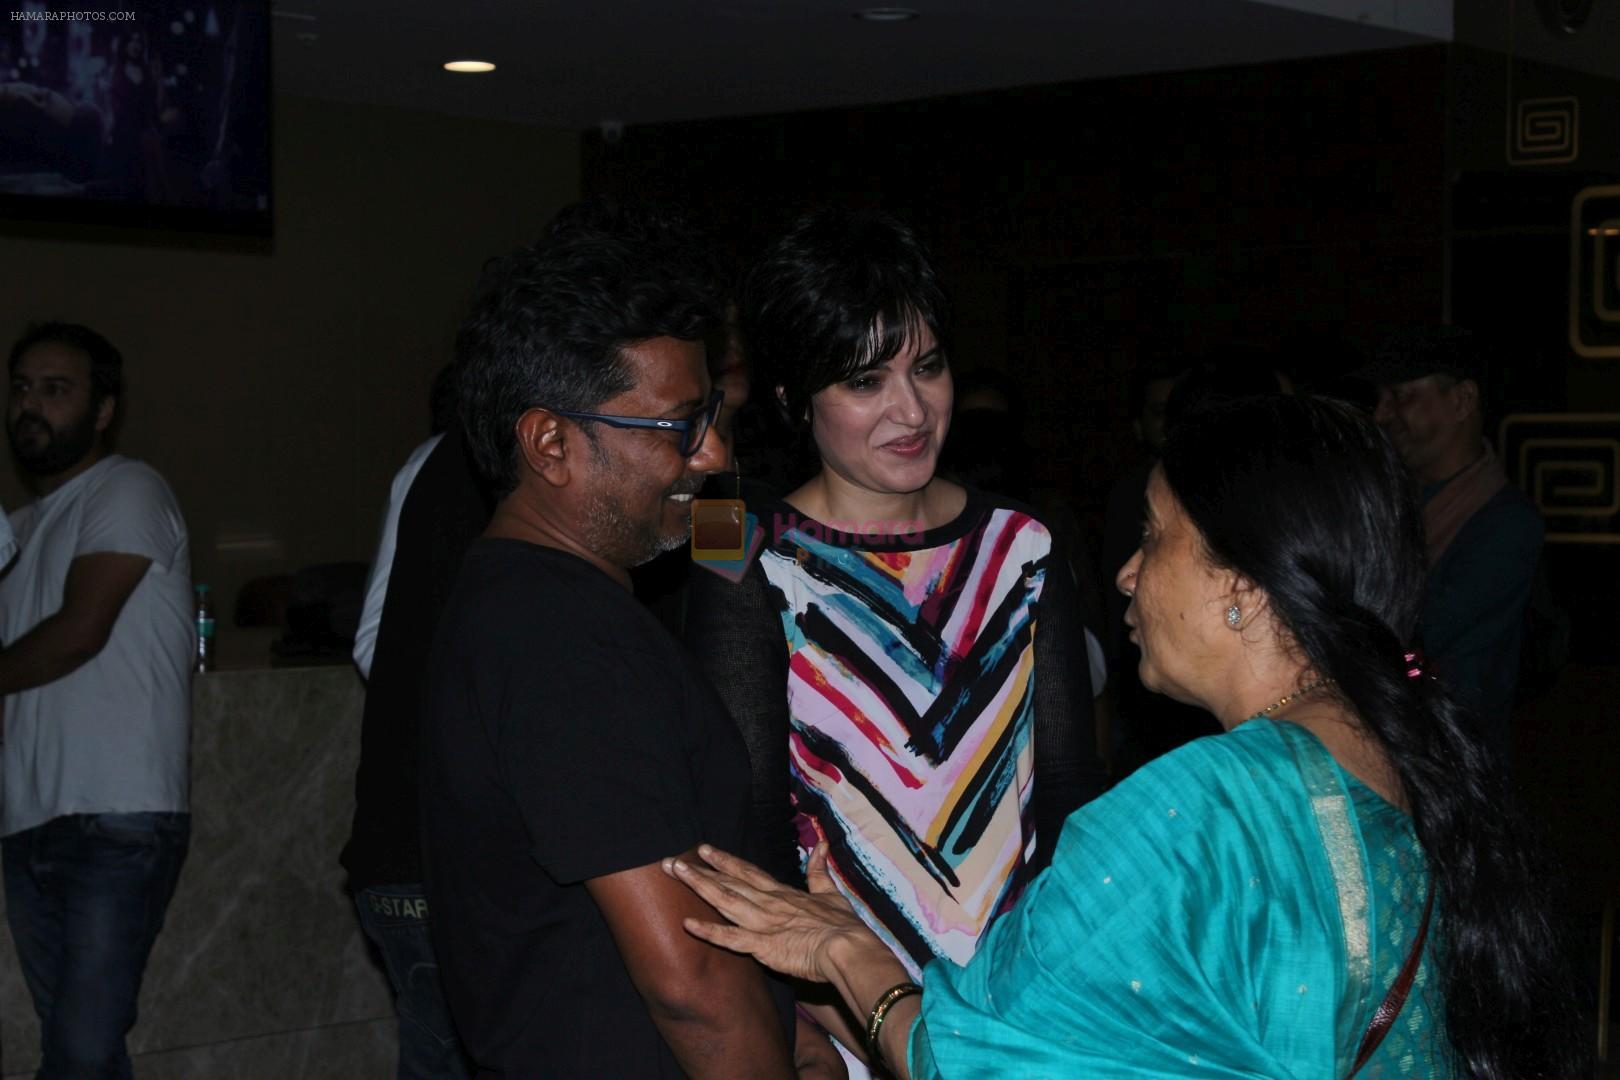 Onir, Arpita Pal at the Special Screening of film Shab on 12th July 2017